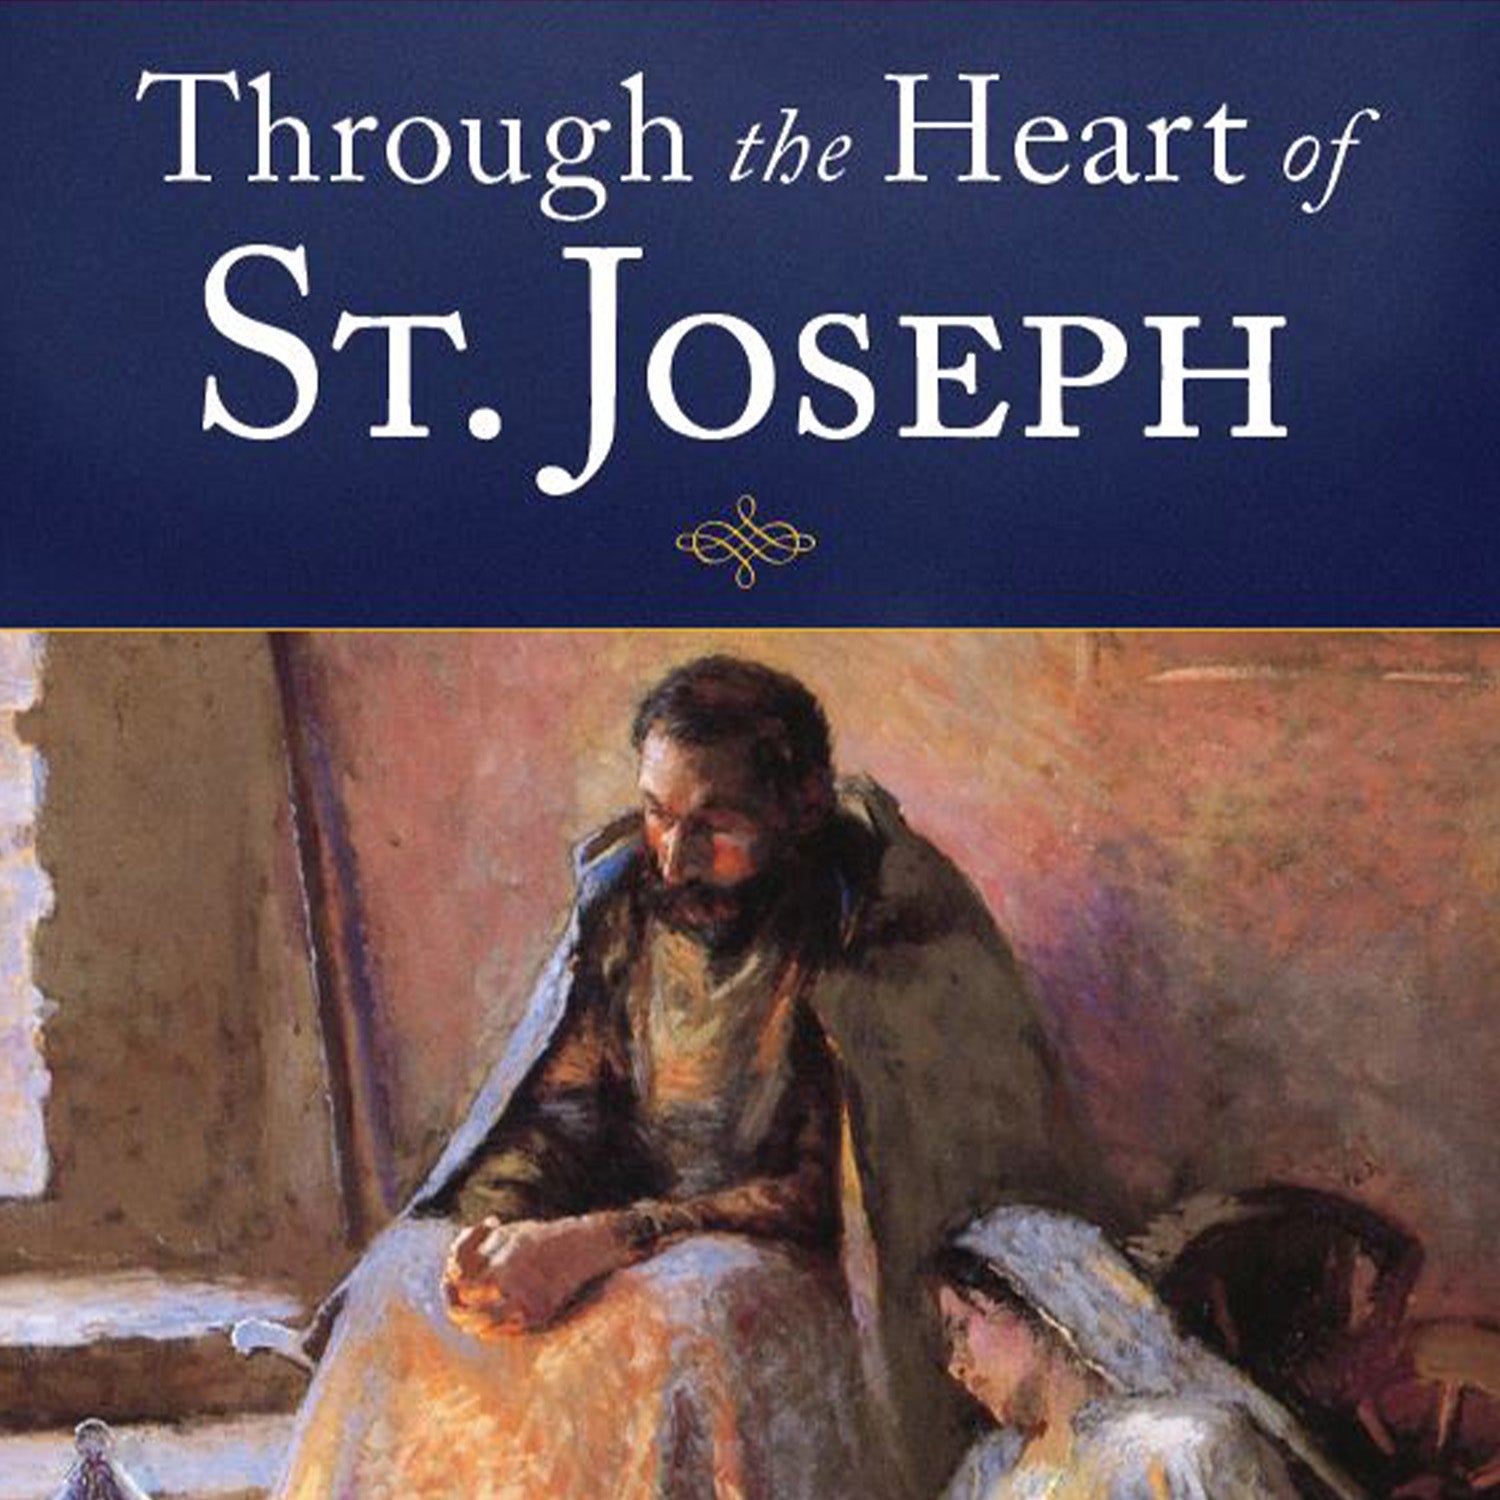 Through the Heart of St. Joseph